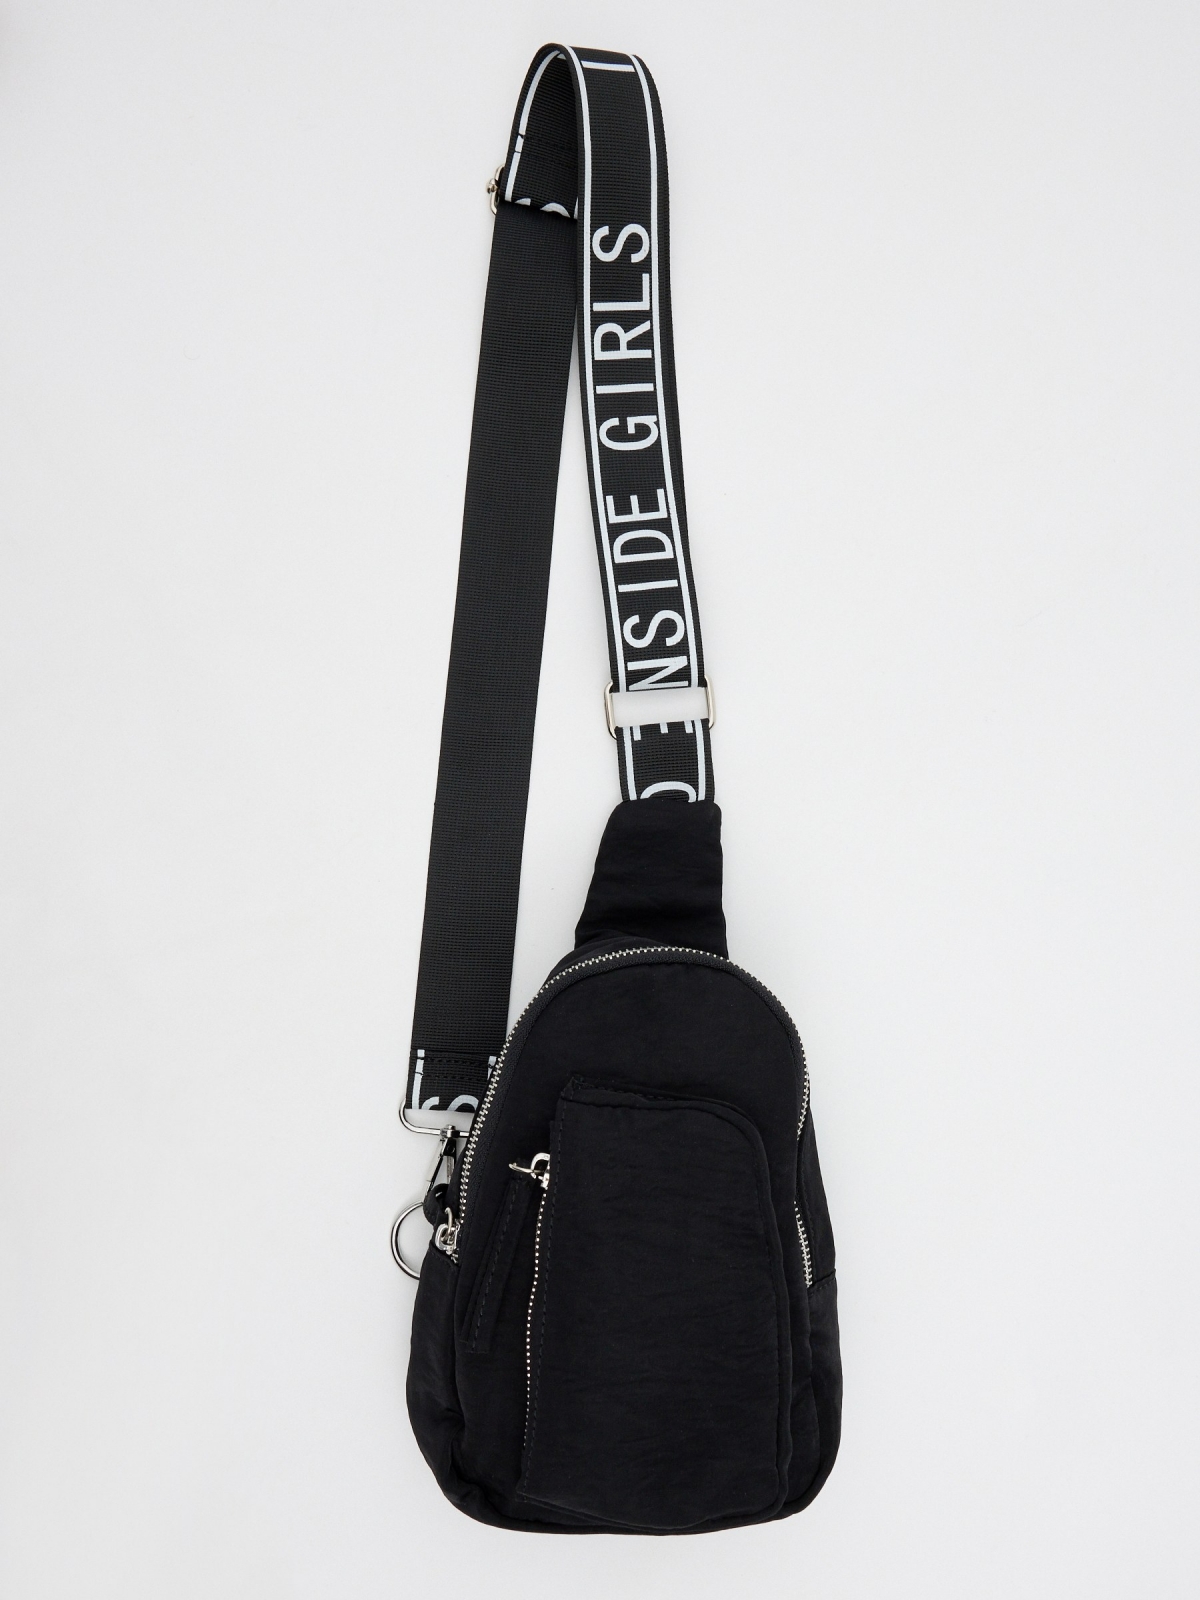 Printed strap crossbody bag black detail view